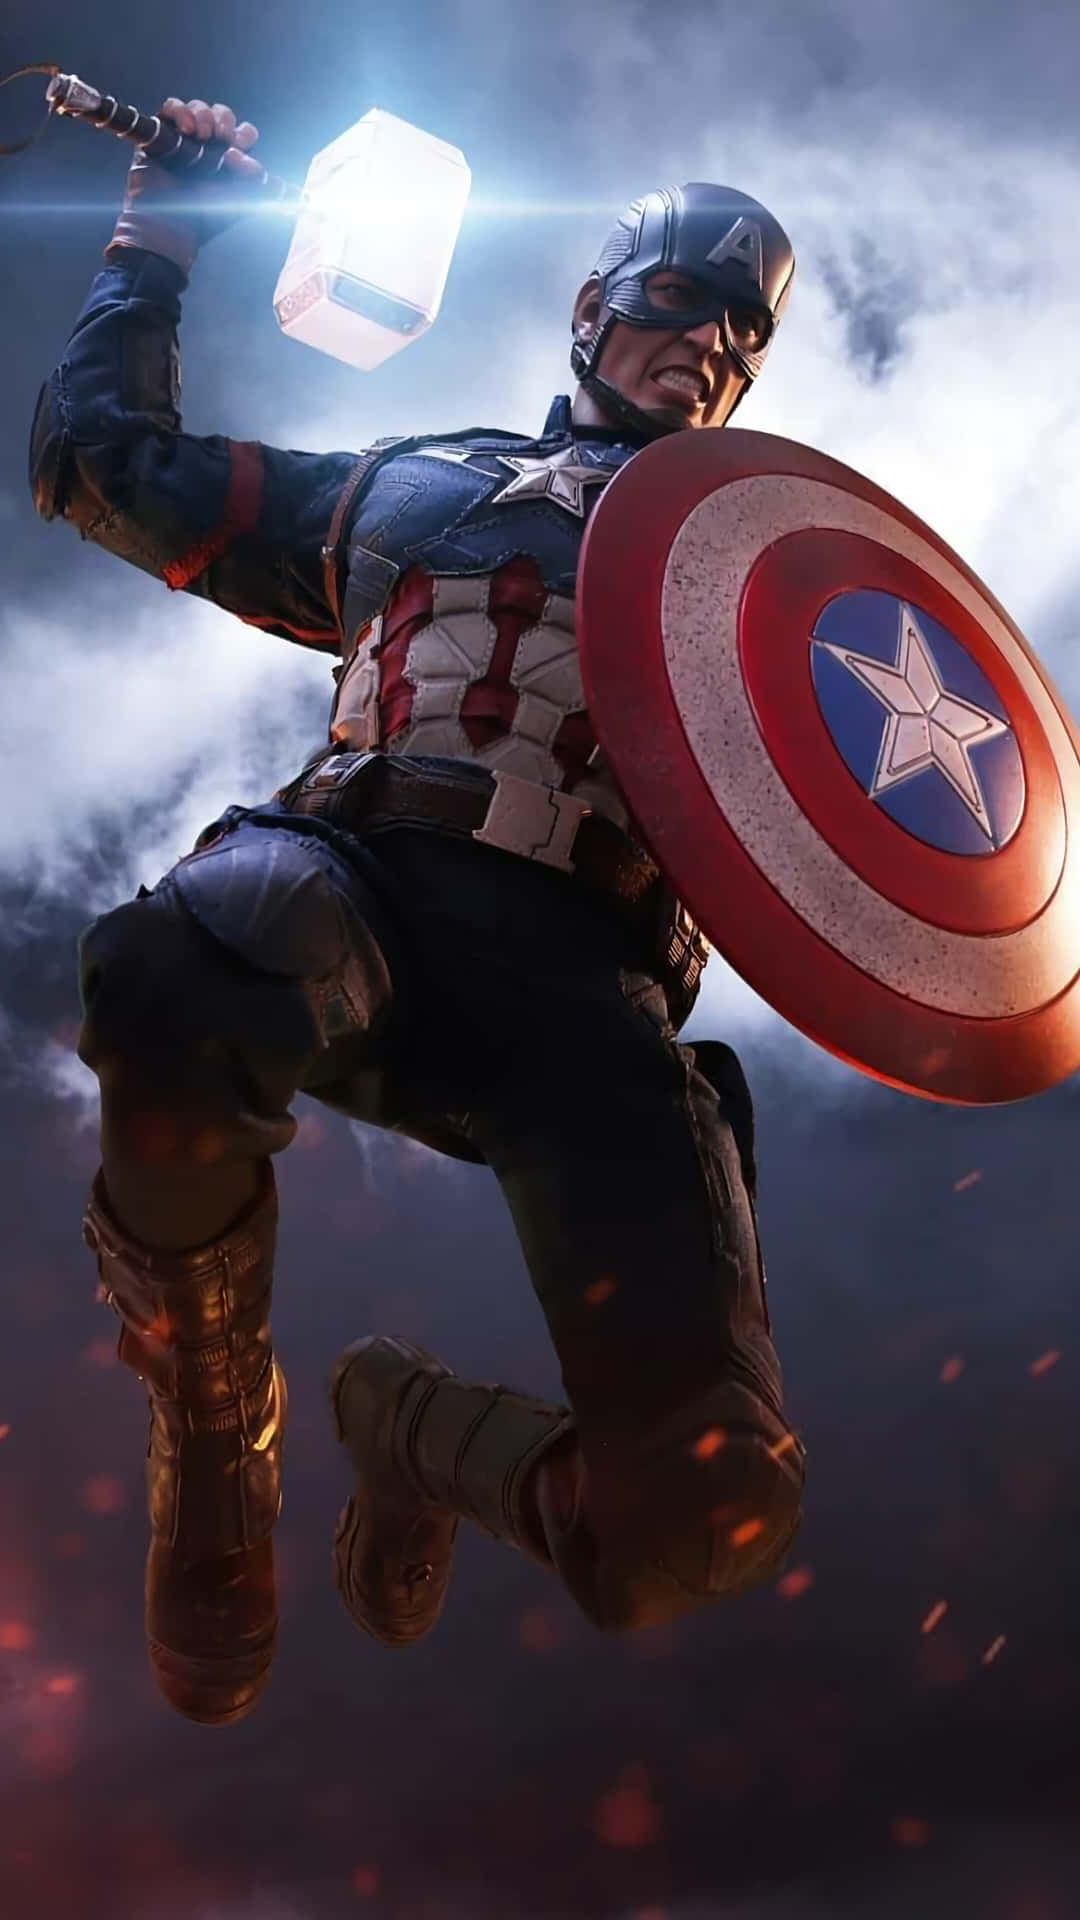 Erlebedie Volle Kraft Von Captain America In 'avengers: Endgame' Wallpaper